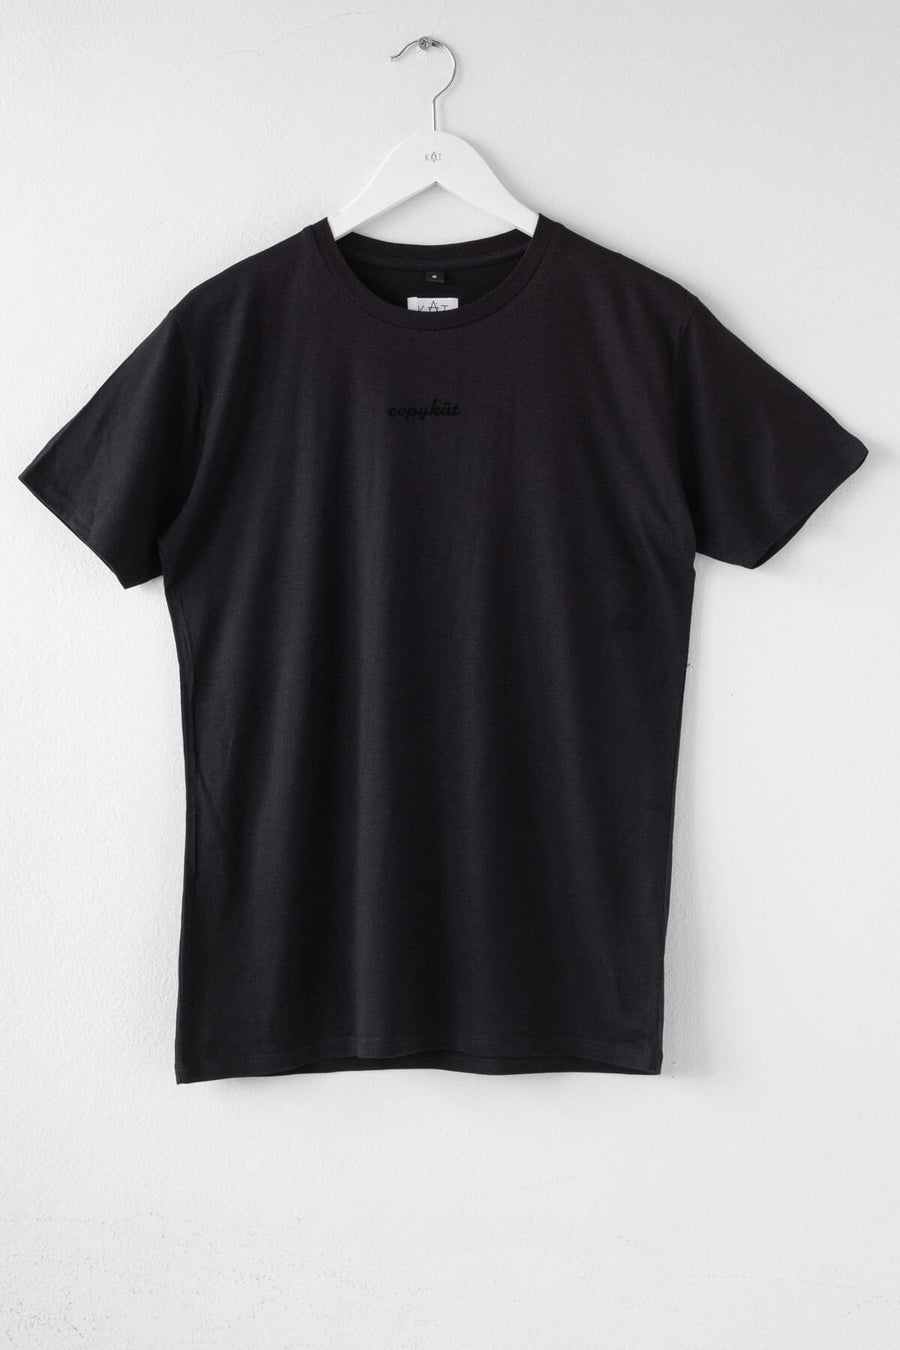 COPYKÄT unisex classic jersey t-shirt - Black